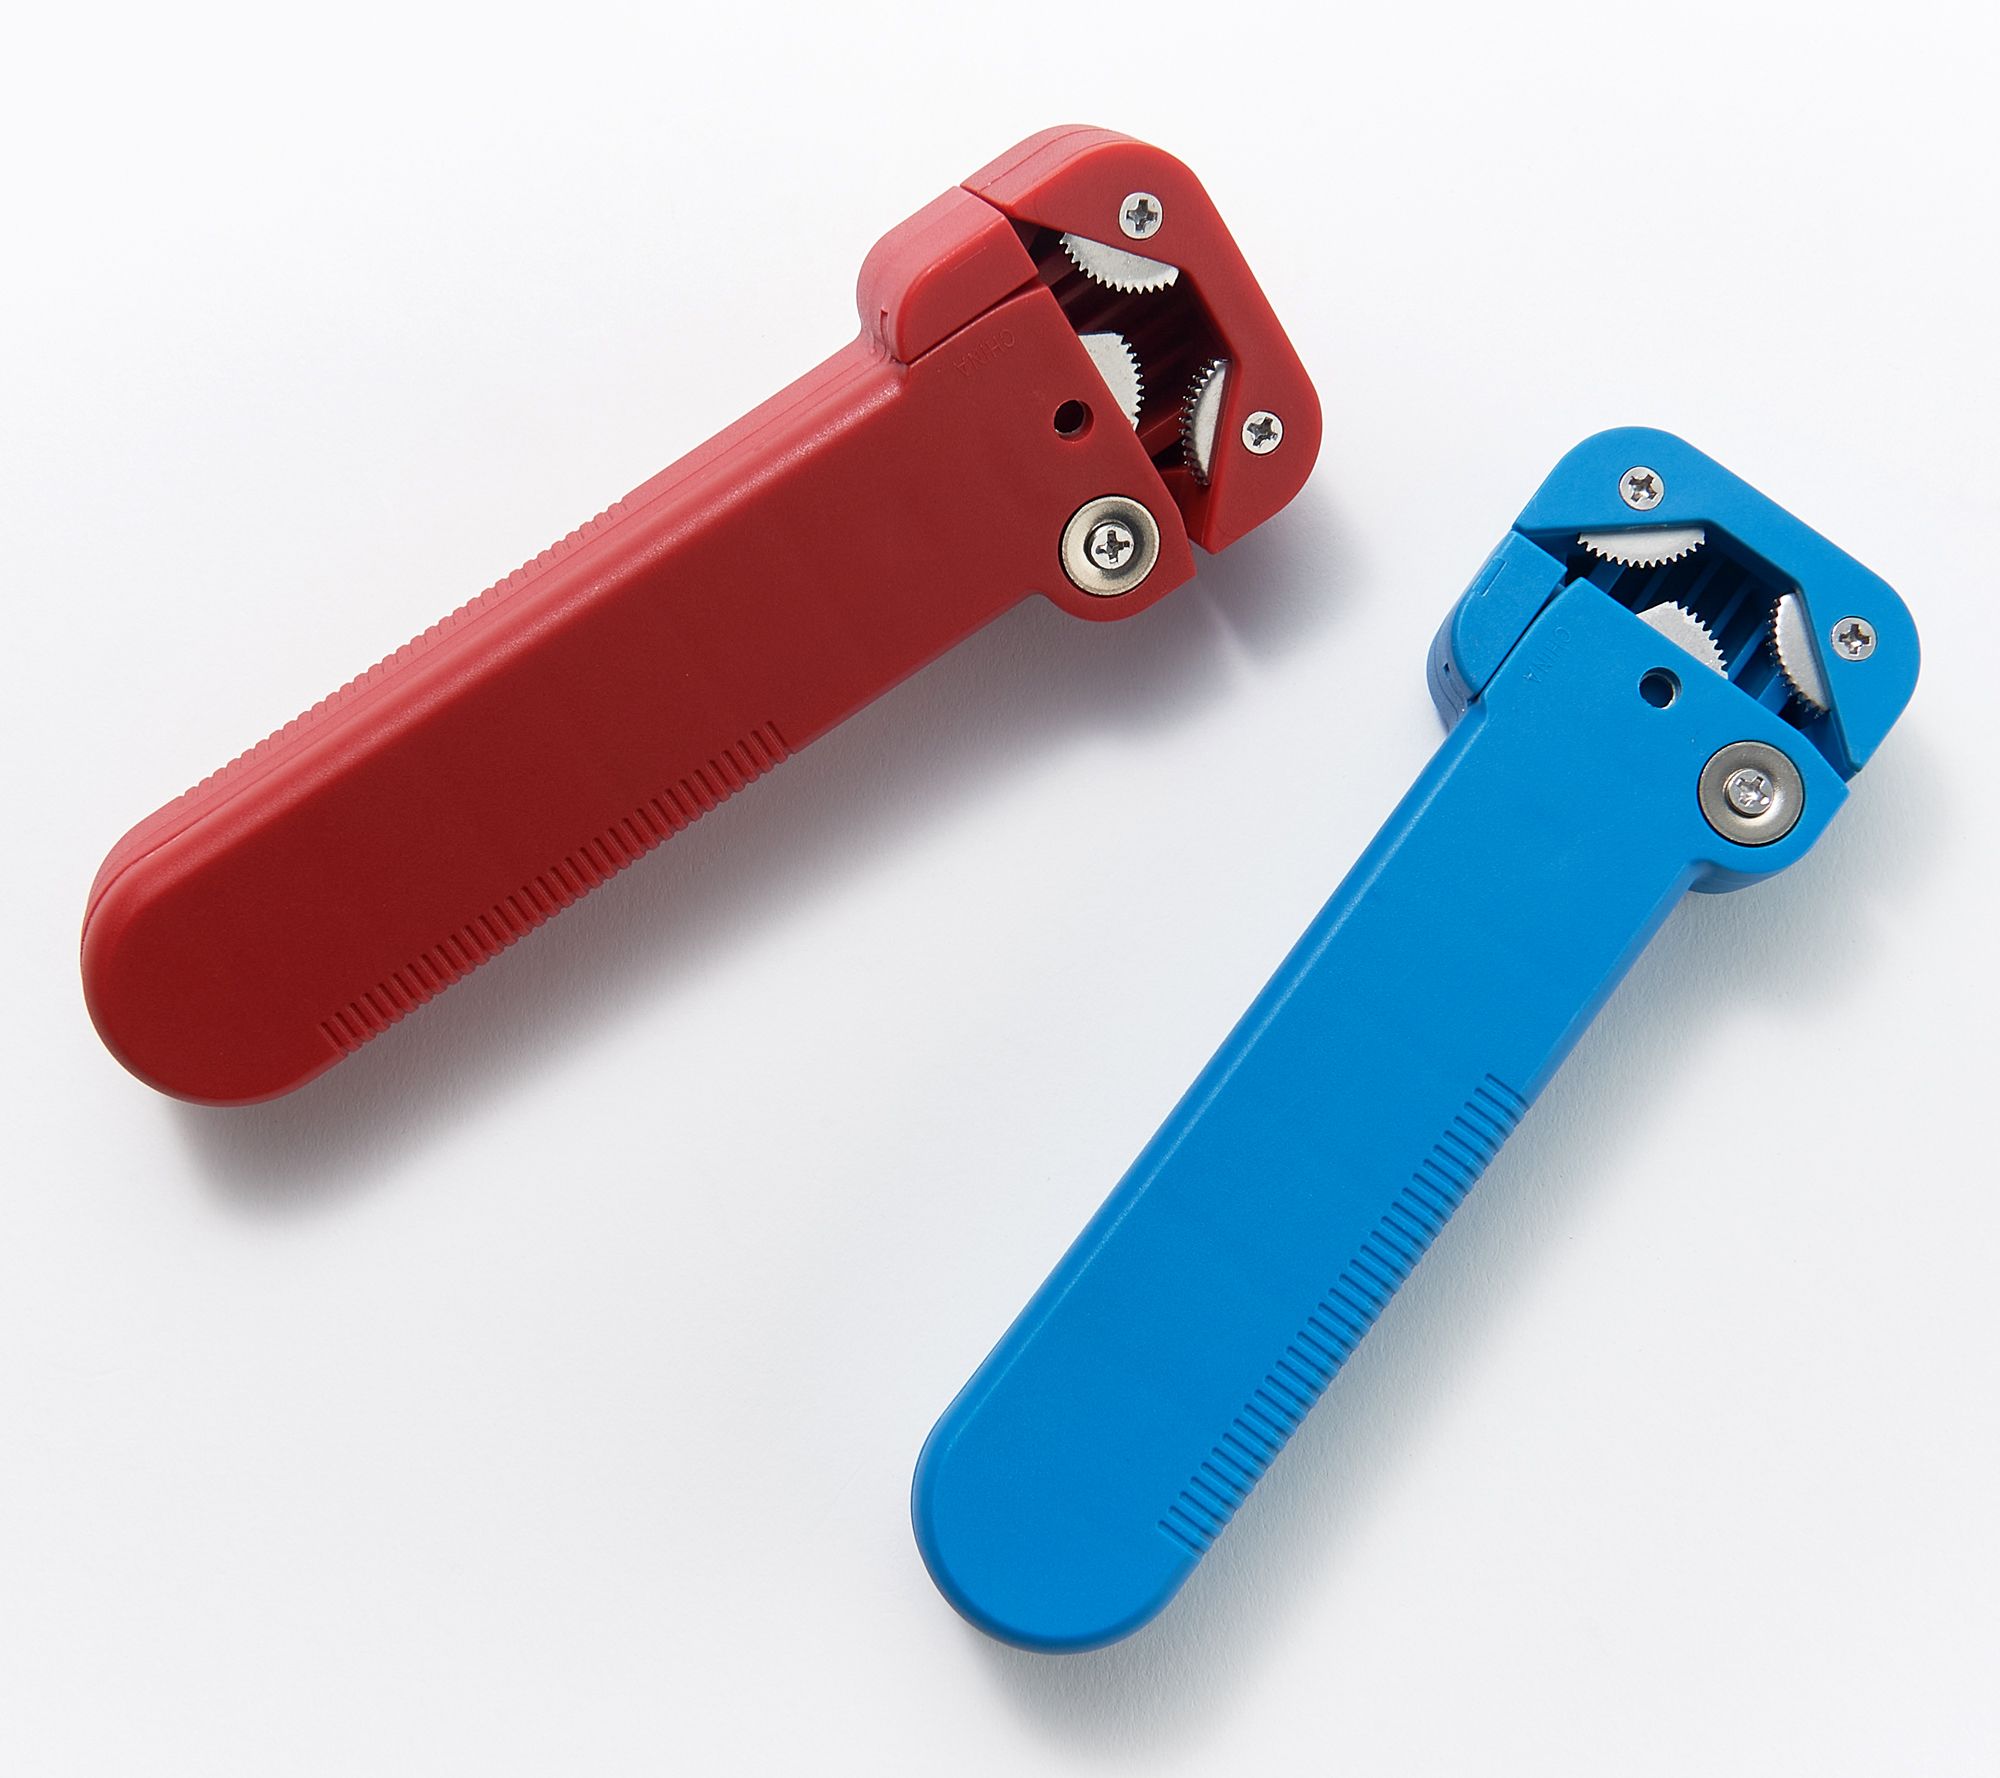 KUHN RIKON Compact SMALLER Size CAN 0PENER & JAR OPENER Set (RED